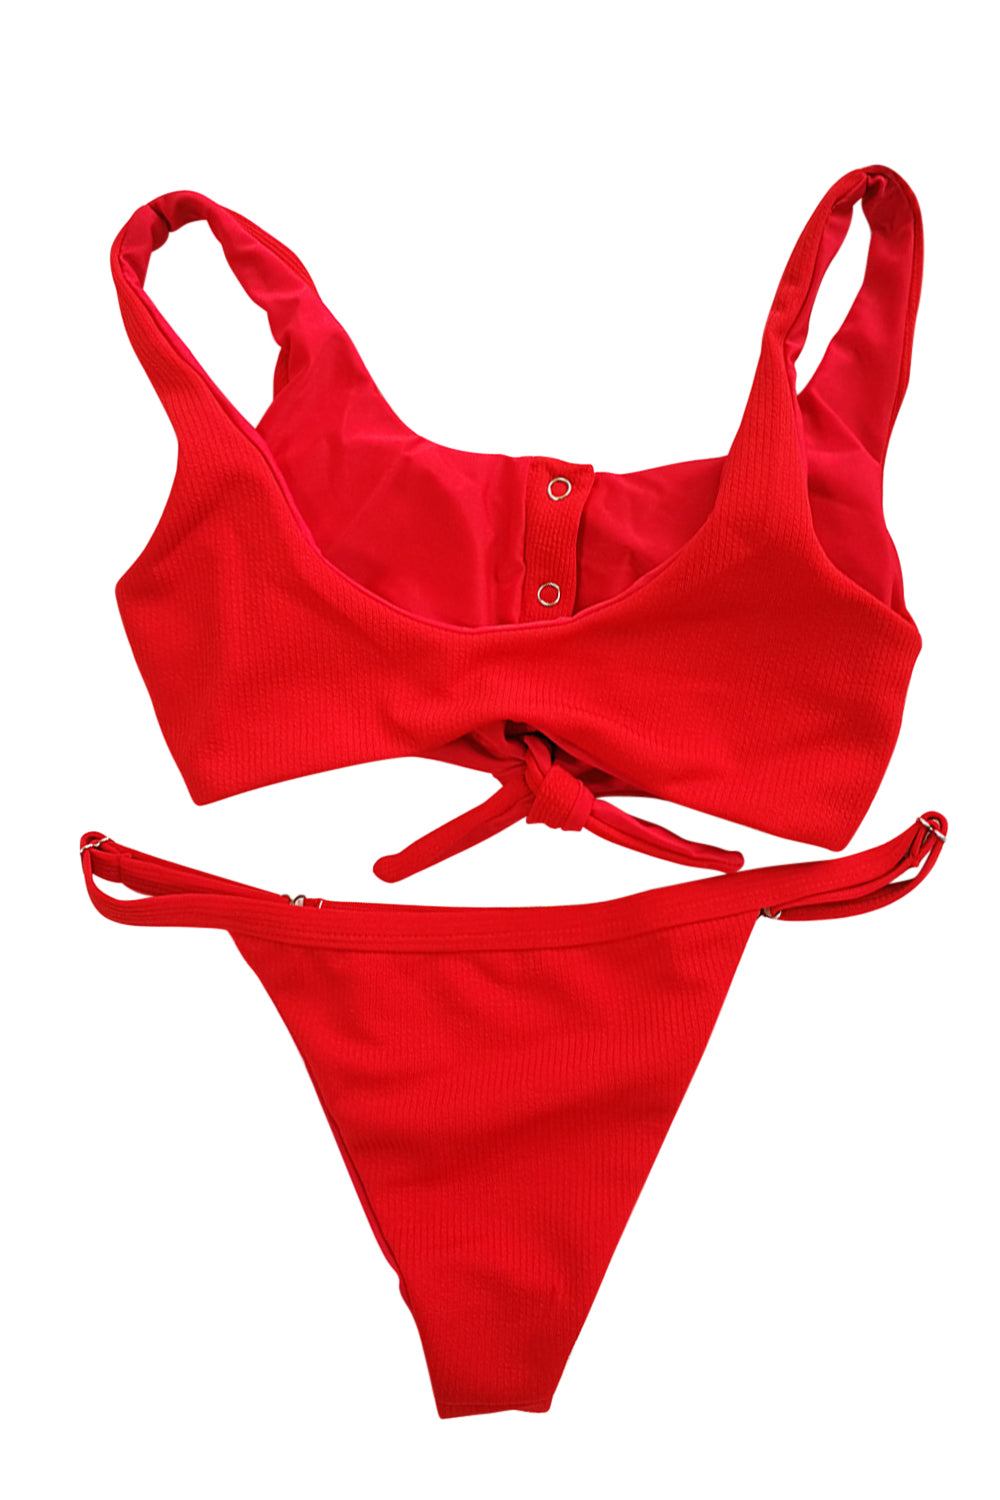 Iyasson Red Sport Style Tank top Bikini Sets